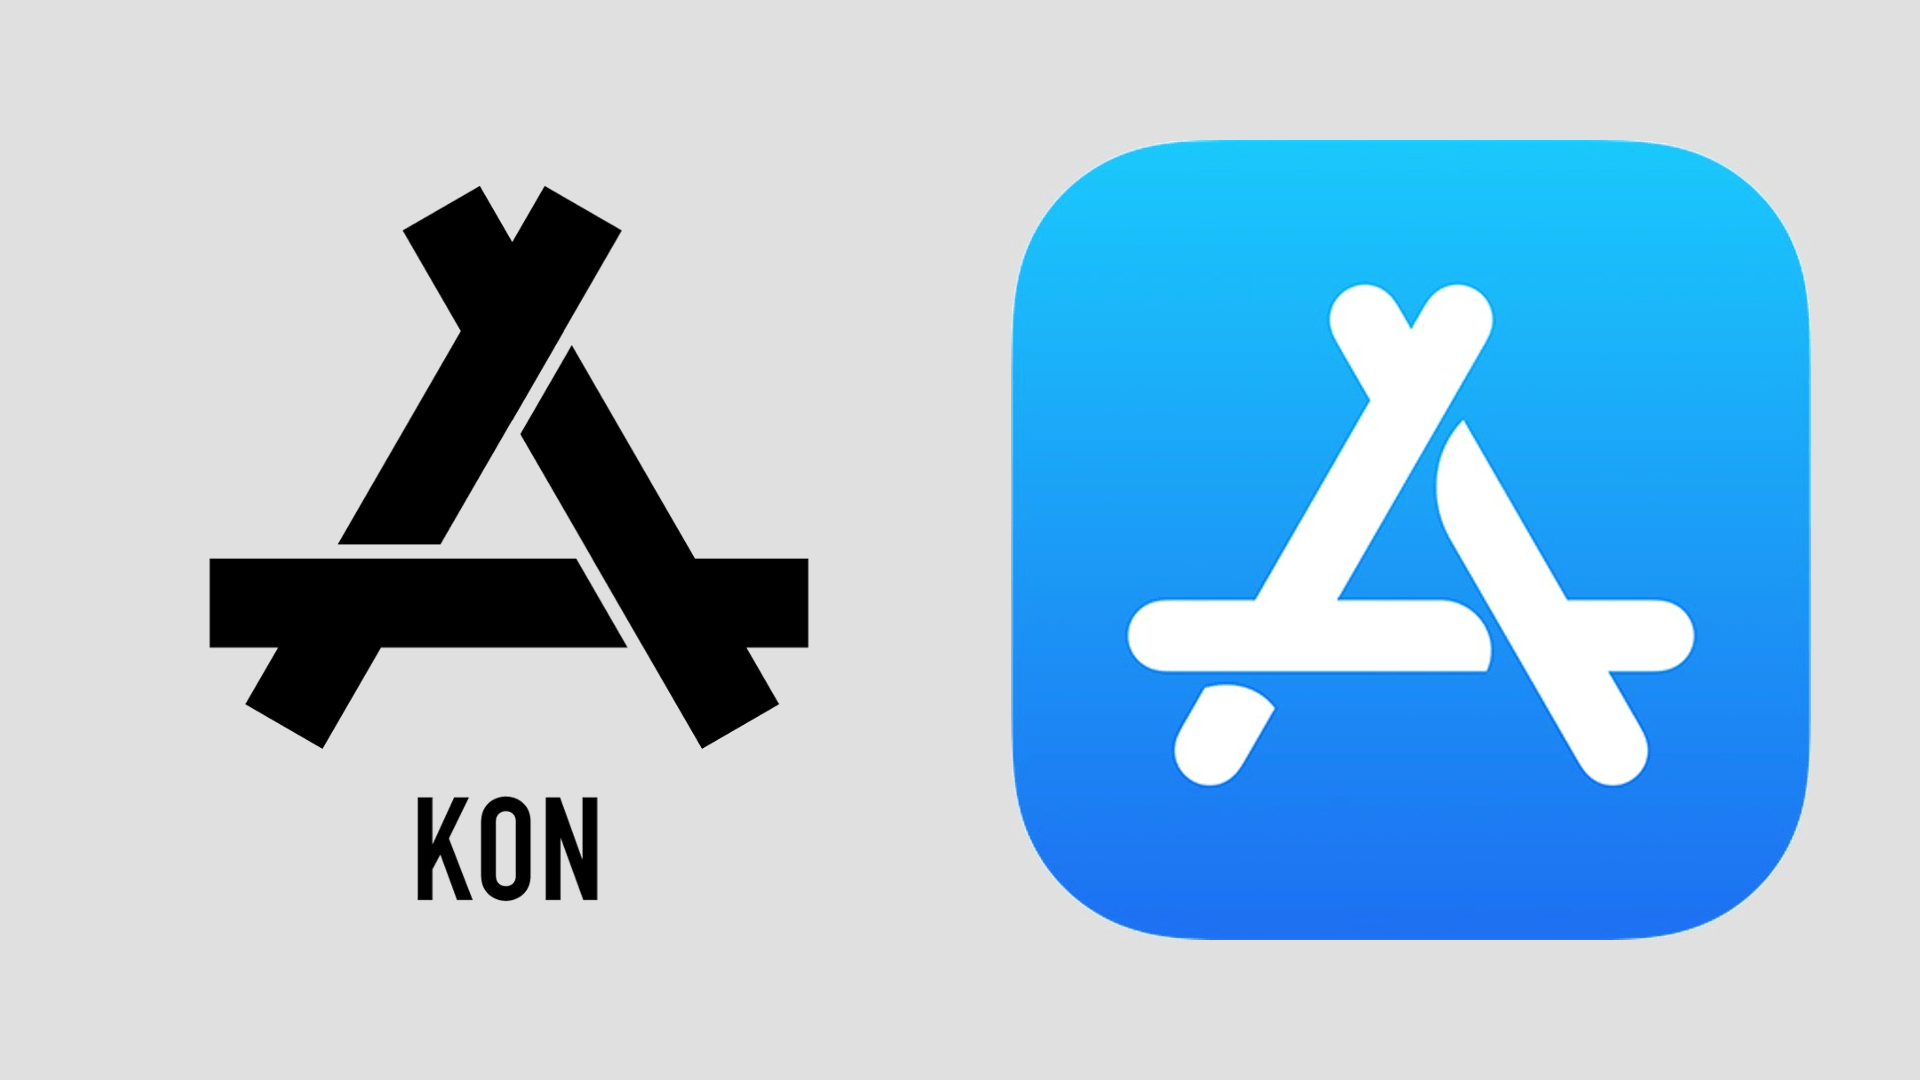 Chinese Clothing Brand KON & Apple App Store Logos